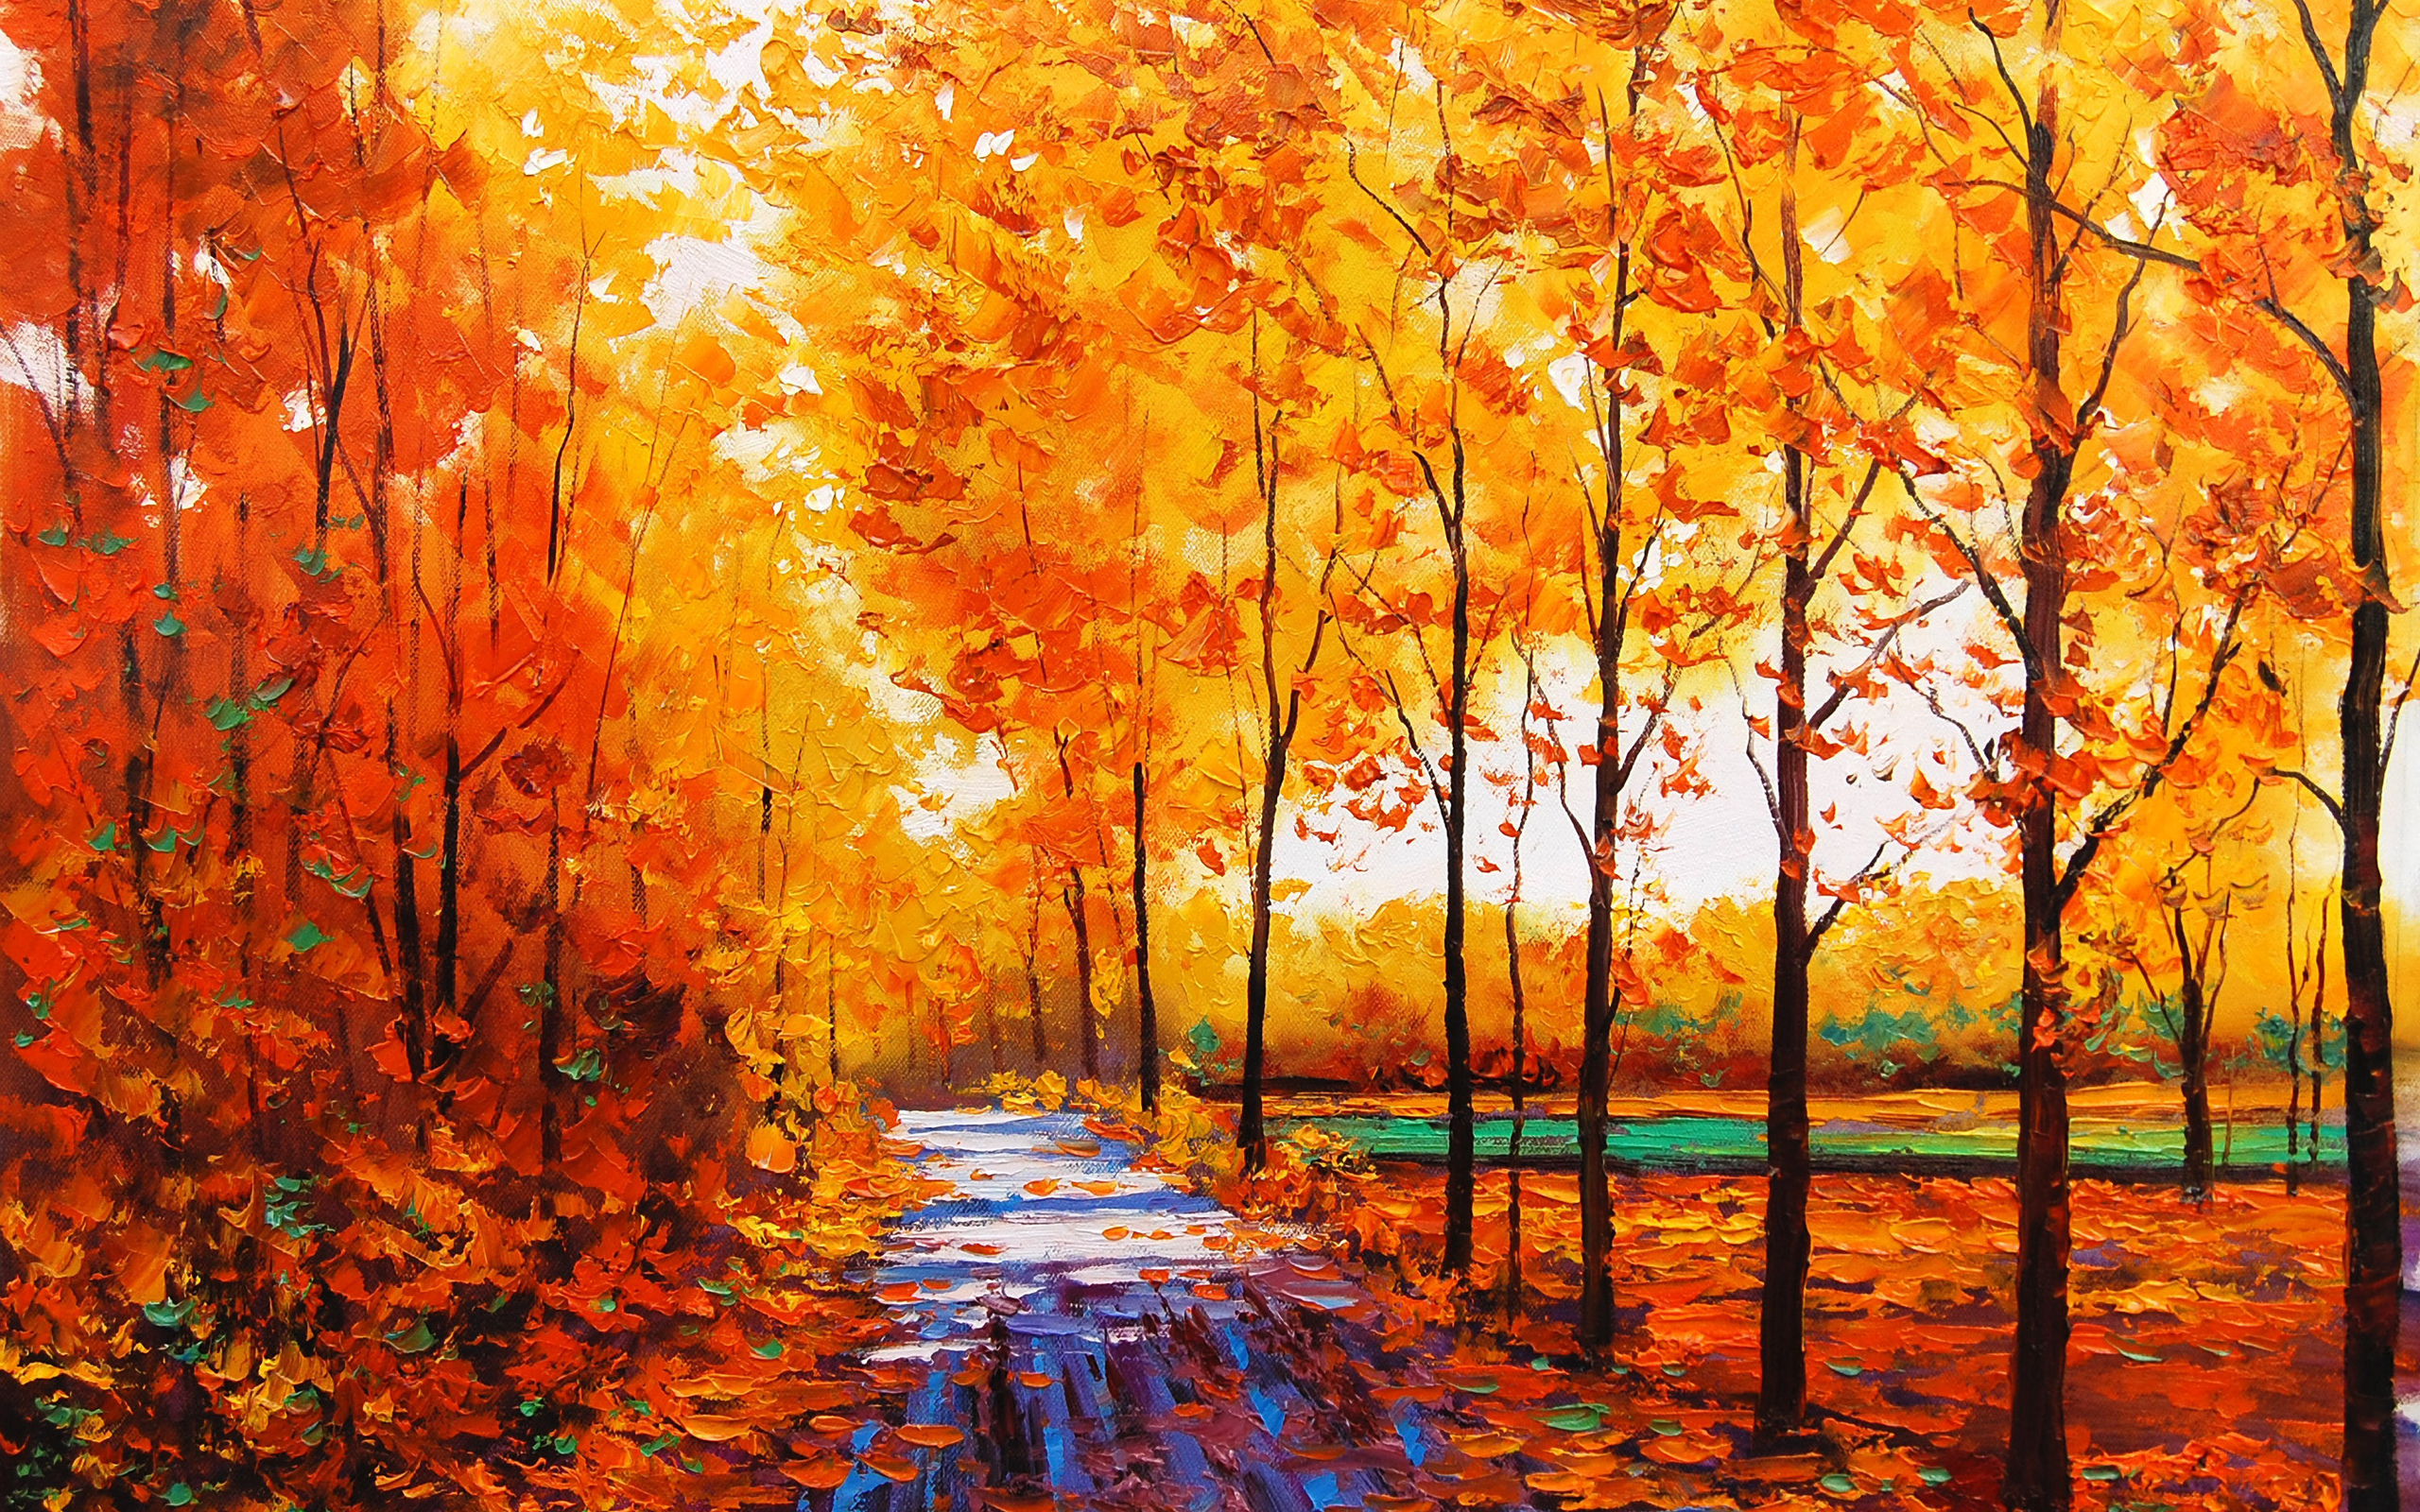 painting, fall, orange (color), artistic, landscape, tree